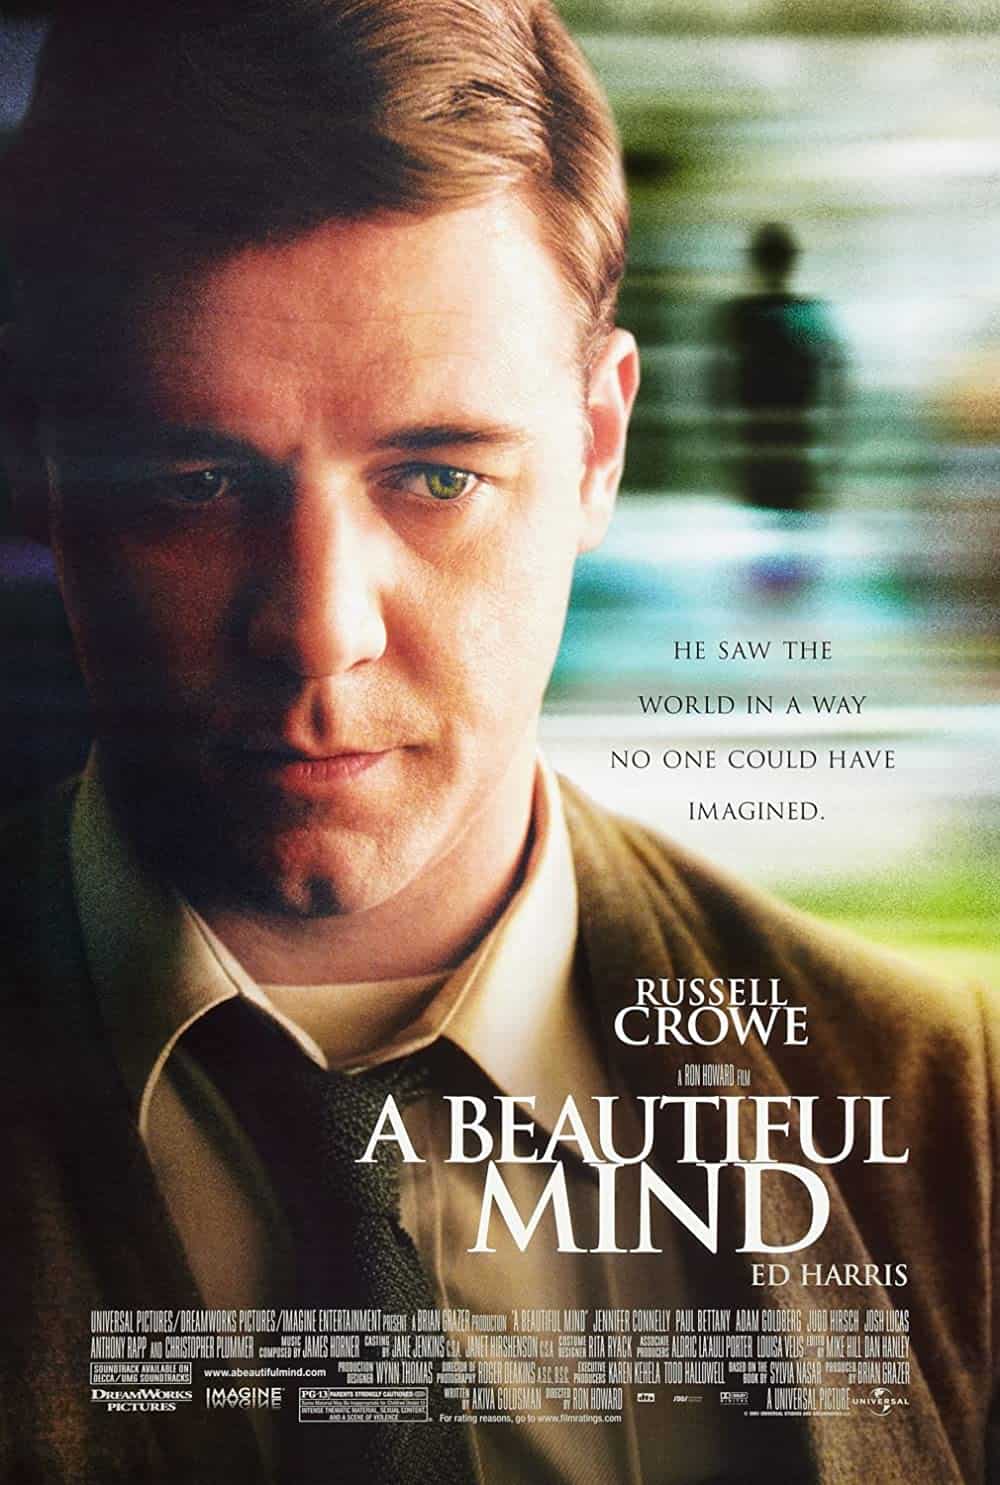 Good Will Hunting similar movie A Beautiful Mind (2001)